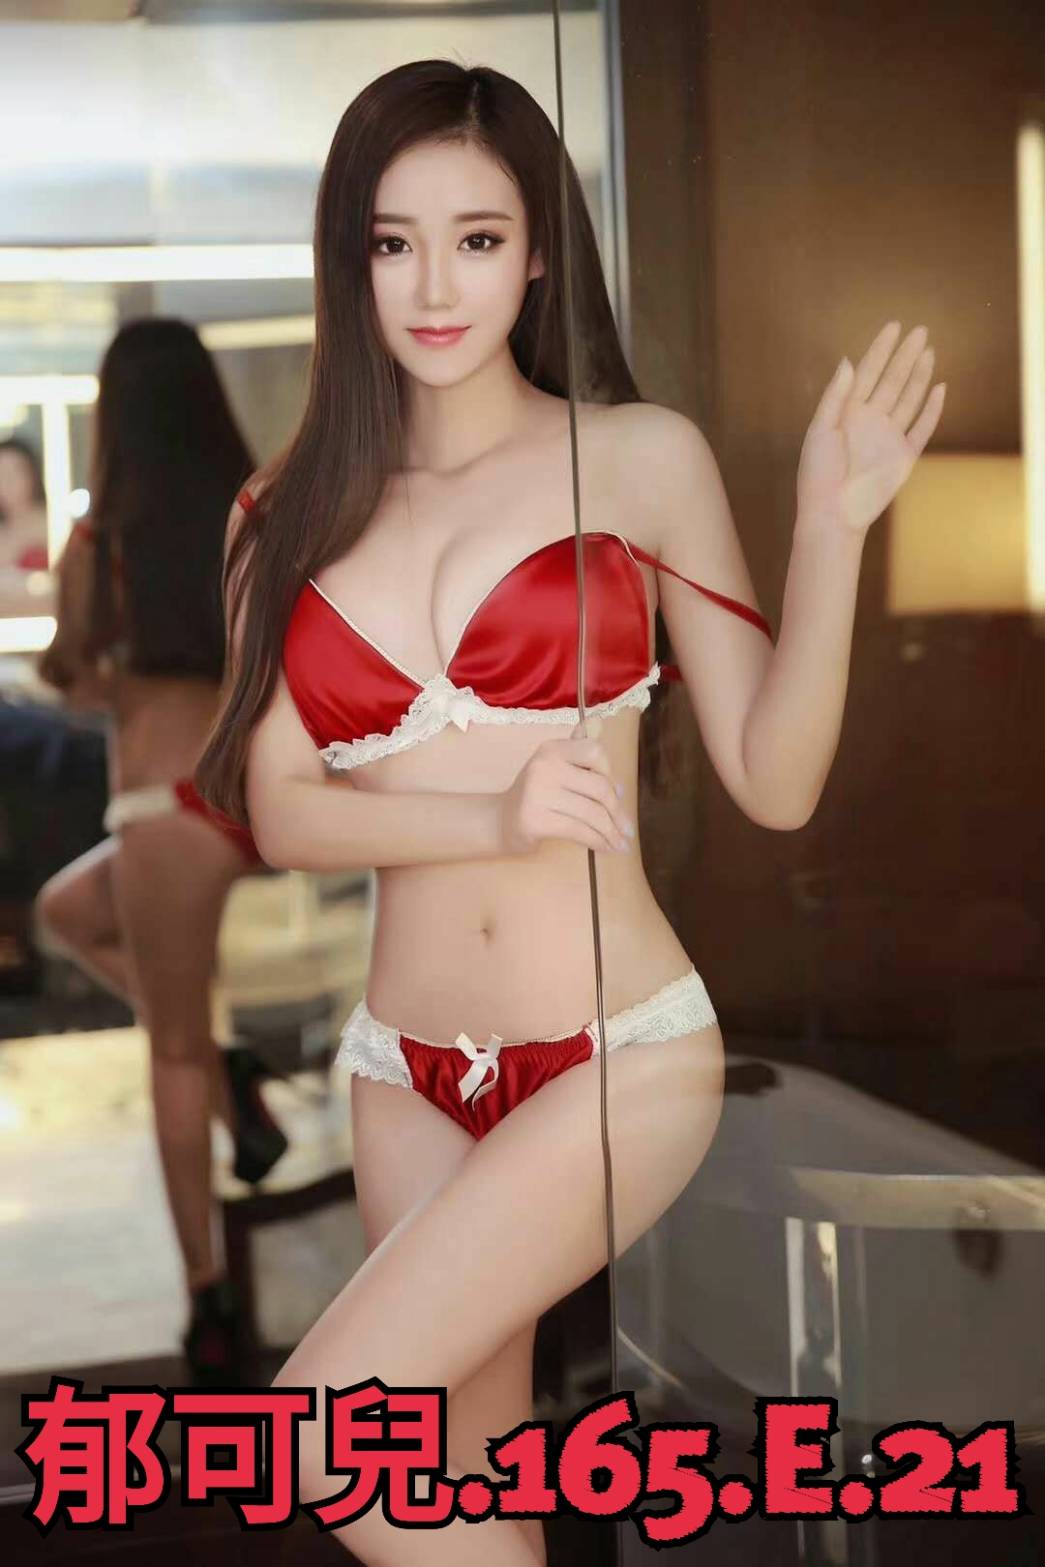 Secret Sex Service Best Thai Dating Sites